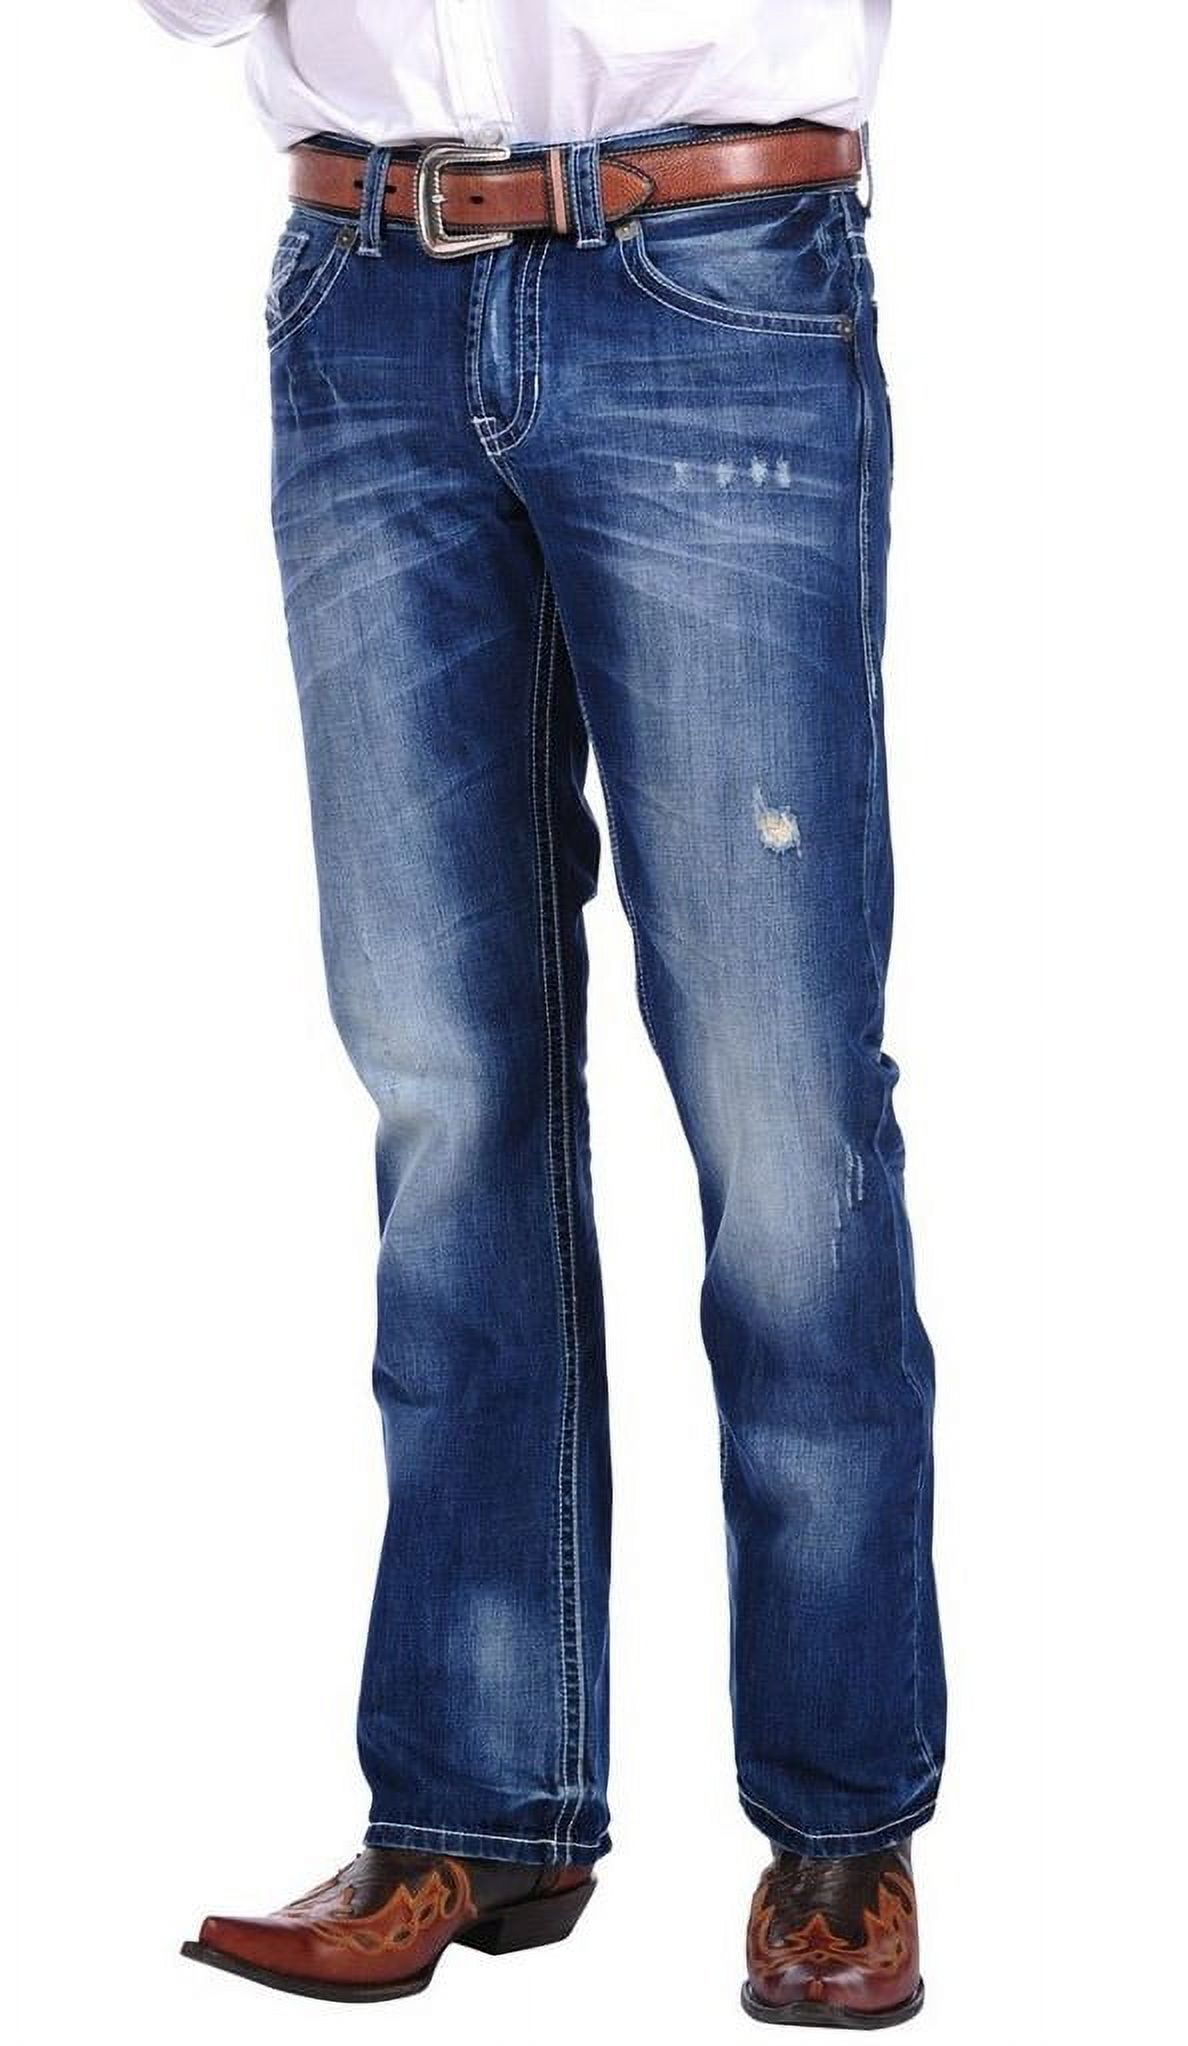 Stetson Denim Jeans Mens Rocks Fit Medium Wash 11-004-1014-3001 BU - image 1 of 3